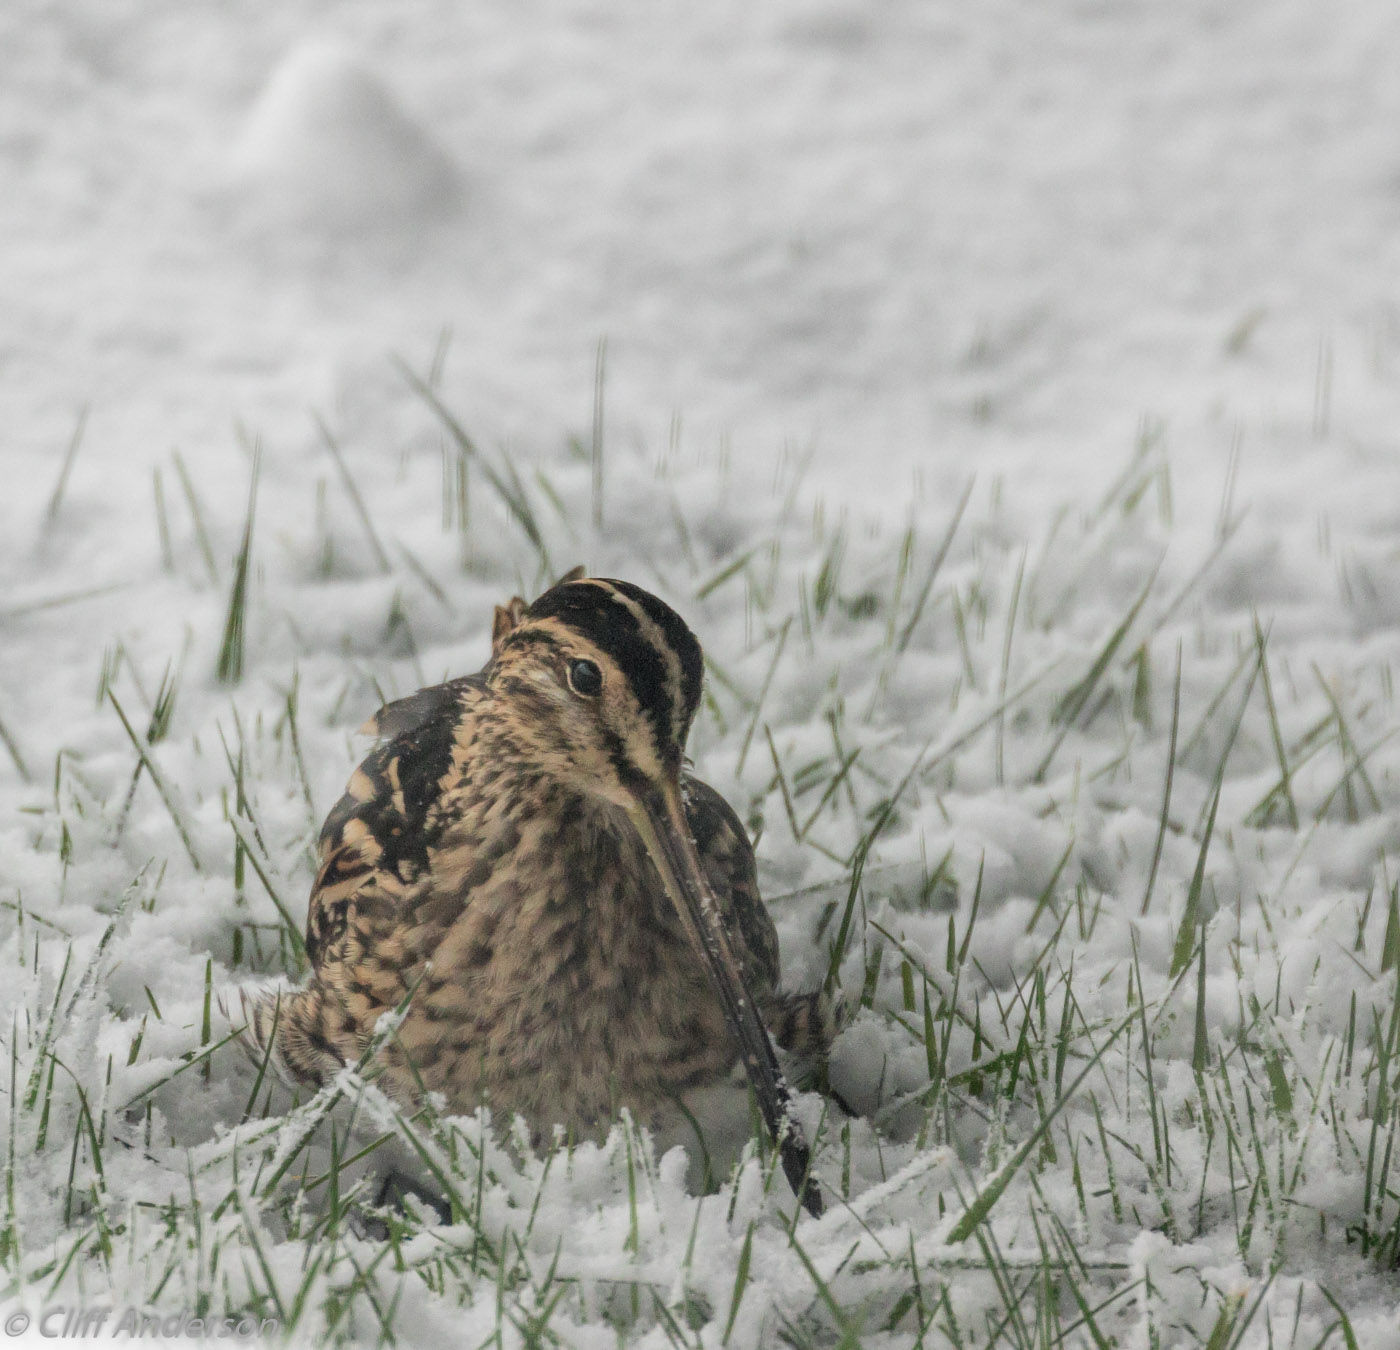 Snipe foraging in snow under Trampoline BG xs 7466.jpg